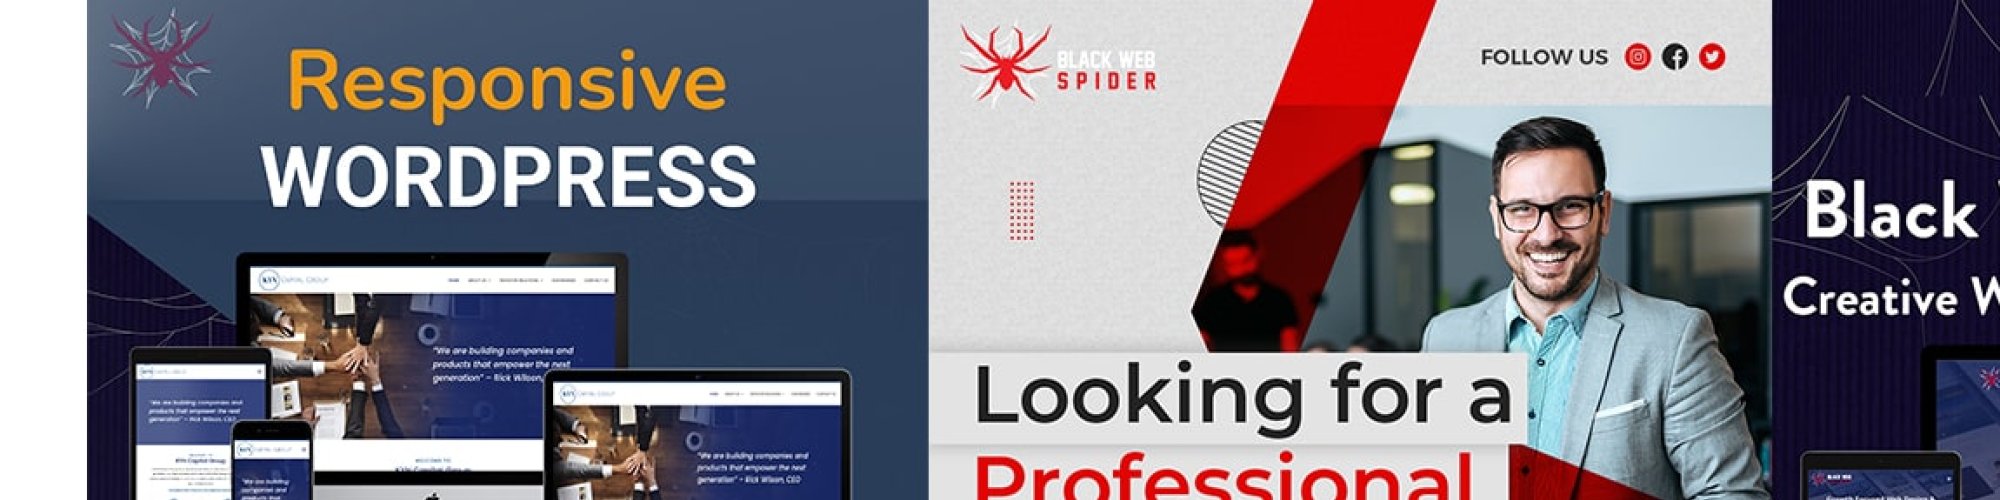 Black Web Spider - Web Design Agency